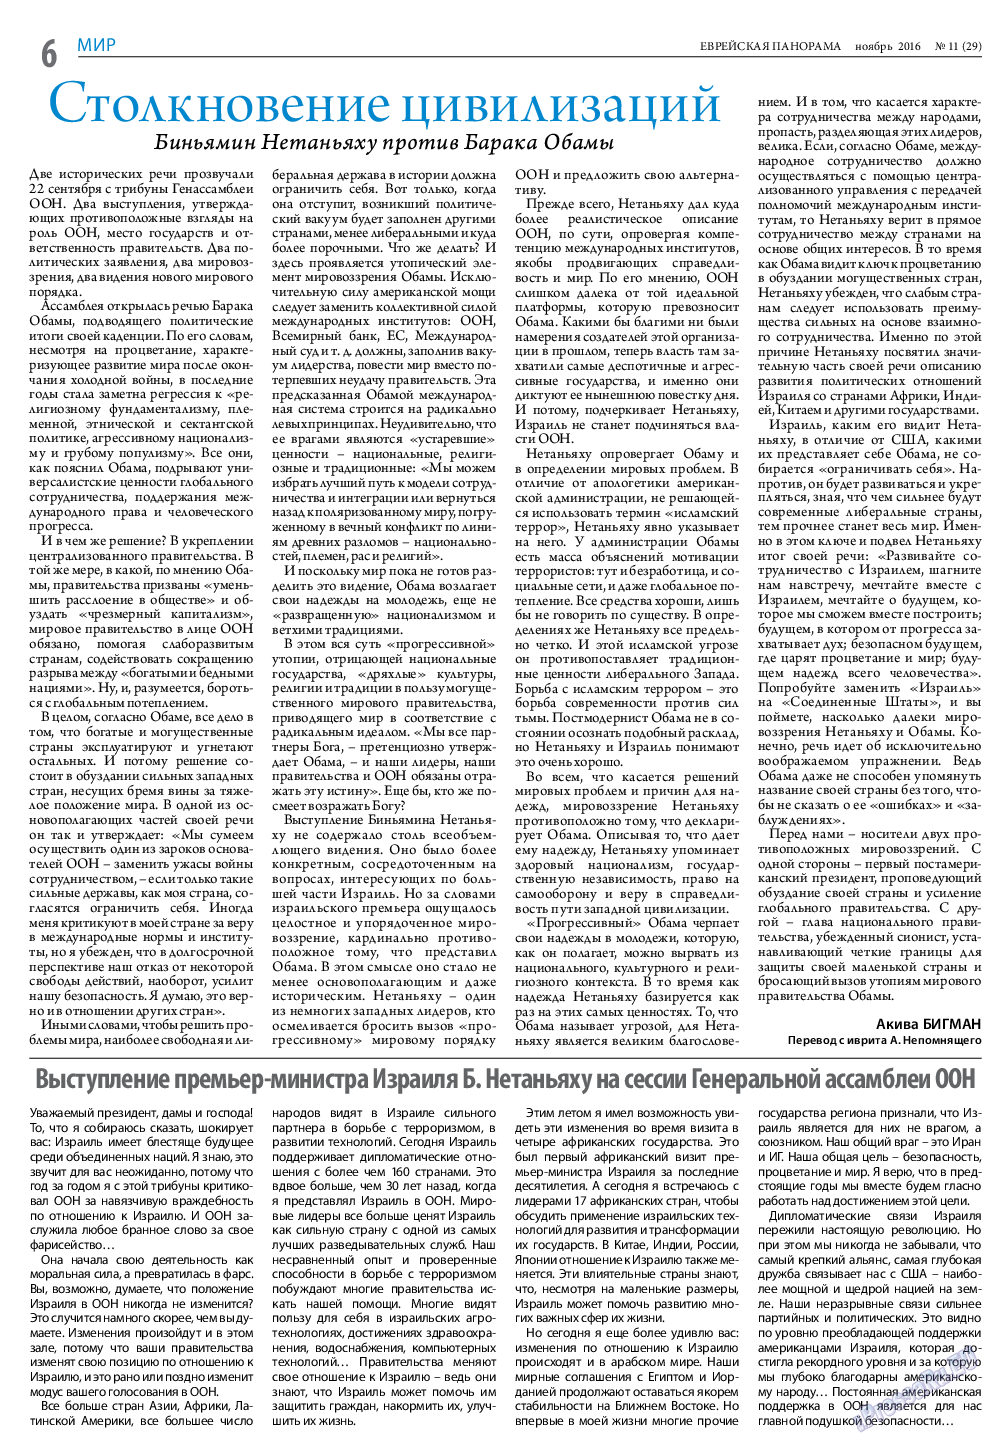 Еврейская панорама, газета. 2016 №11 стр.6